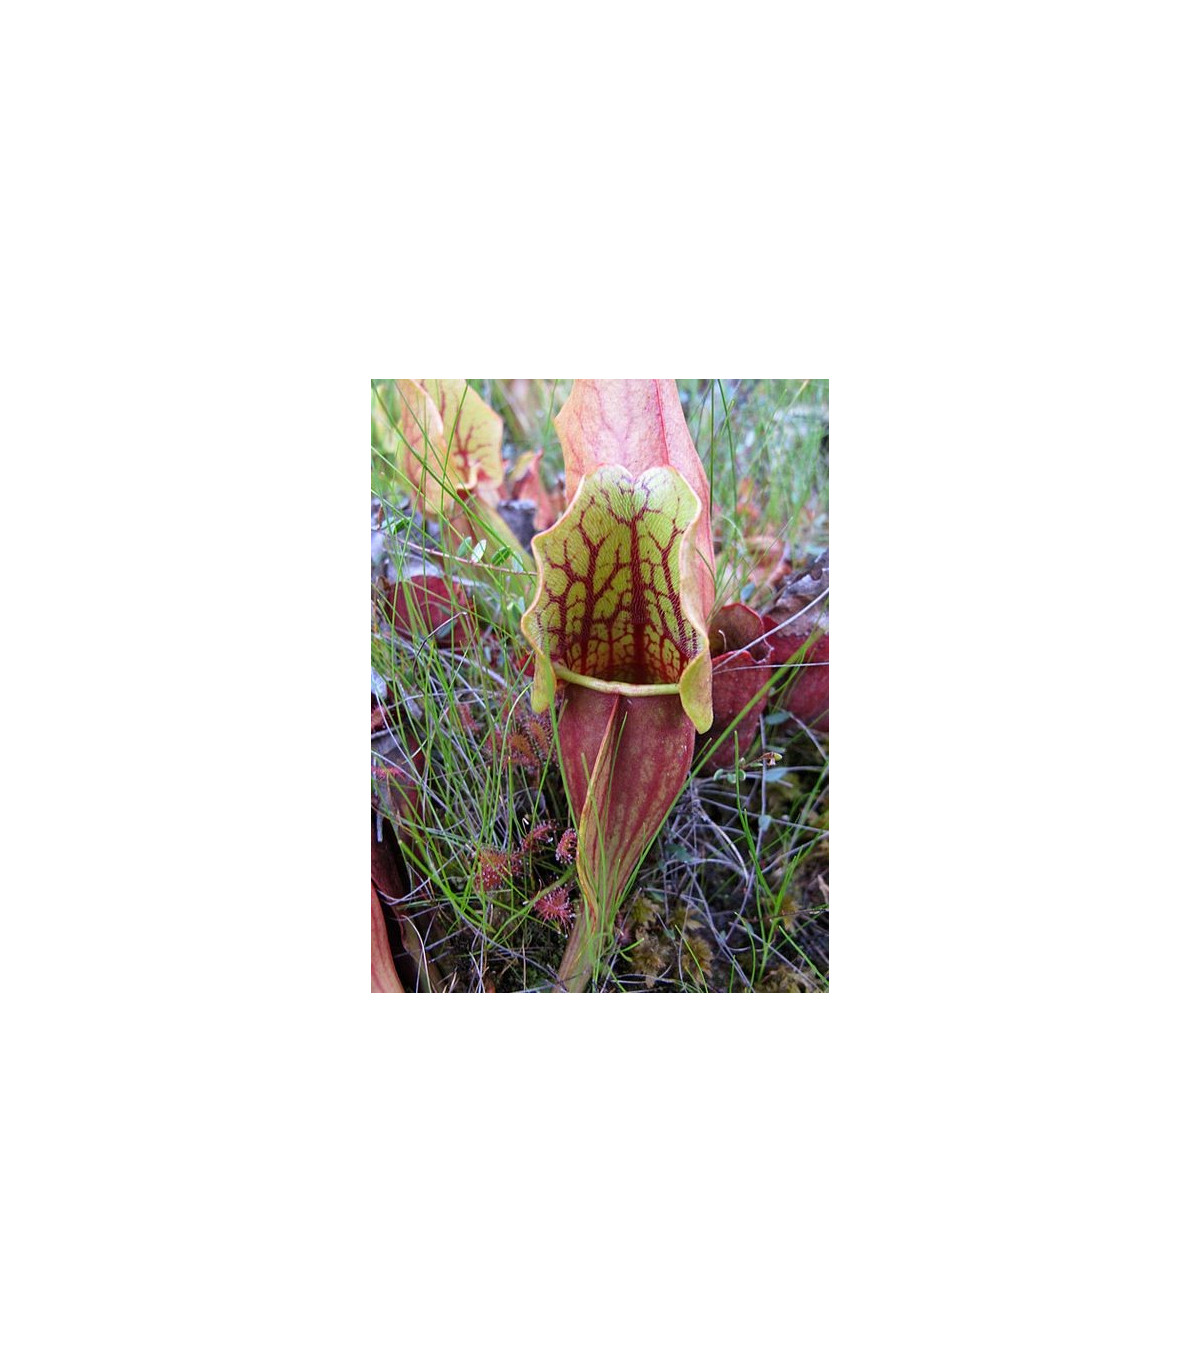 Špirlica purpurová - Sarracenia purpurea - predaj semien - 8 ks